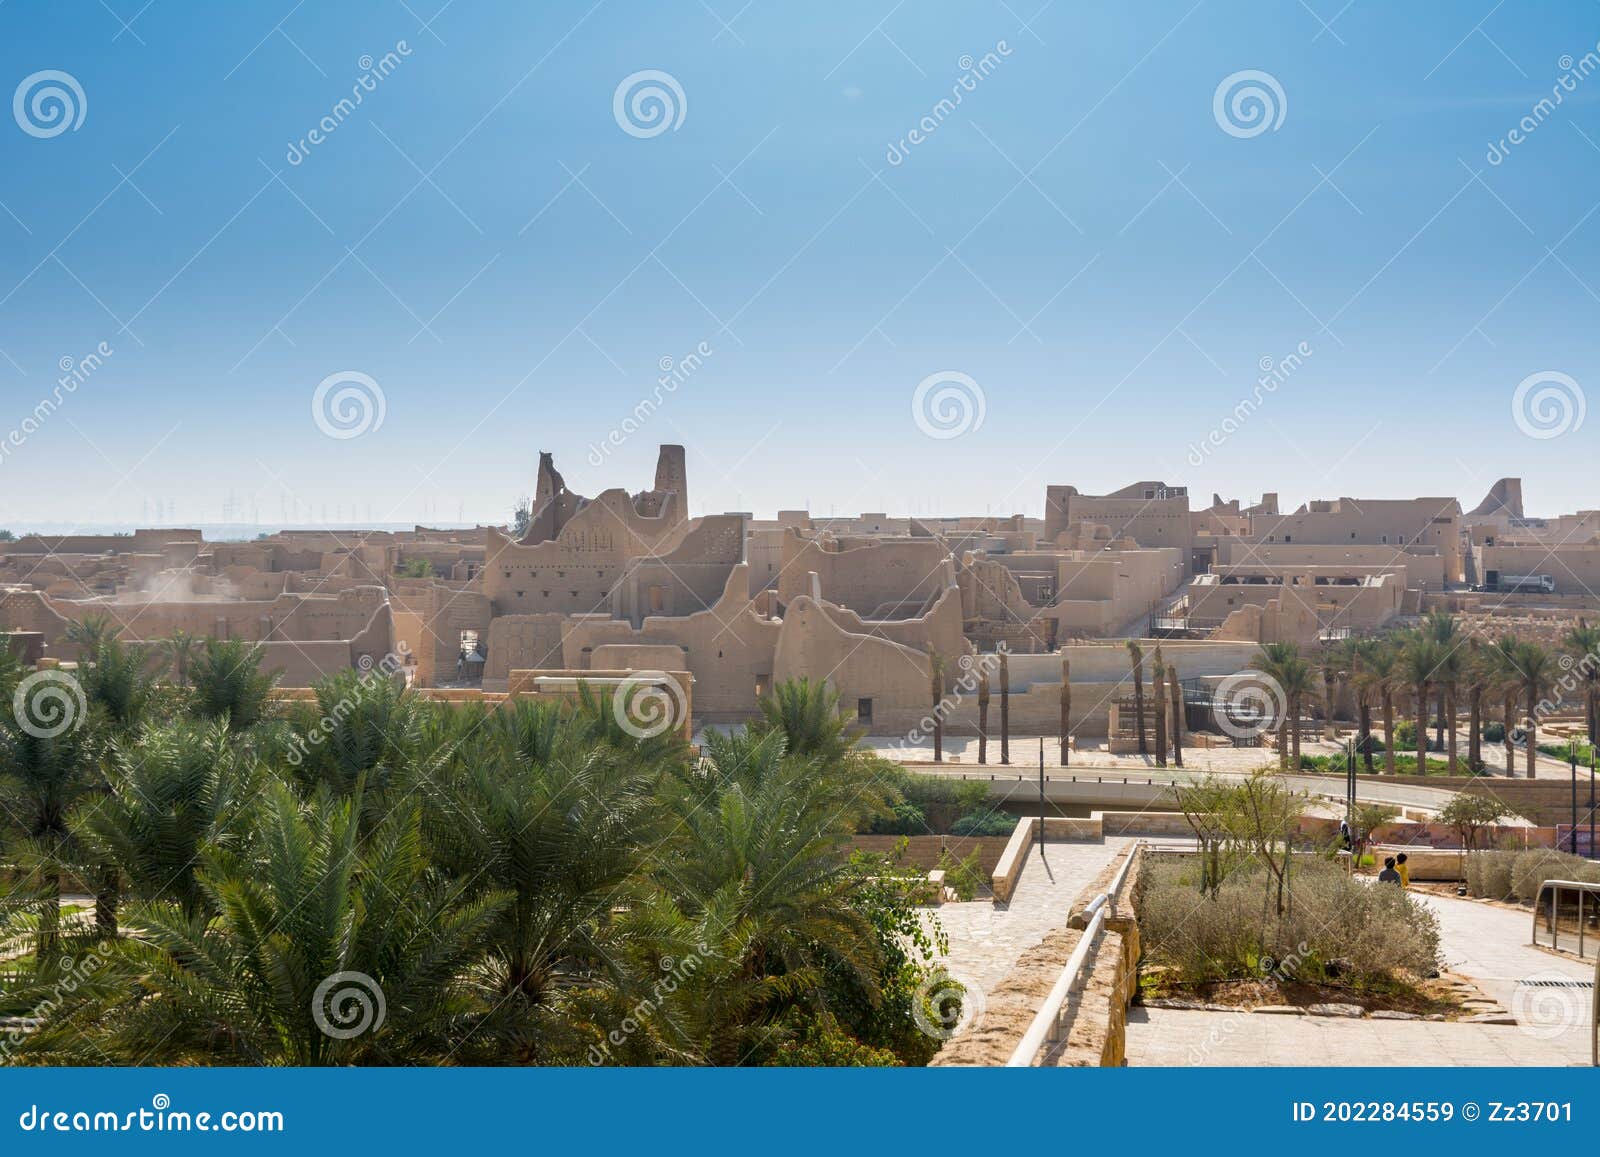 historic buildings in dariyah clay castle, also as dereyeh and dariyya, a town in riyadh, saudi arabia, original home of the saudi